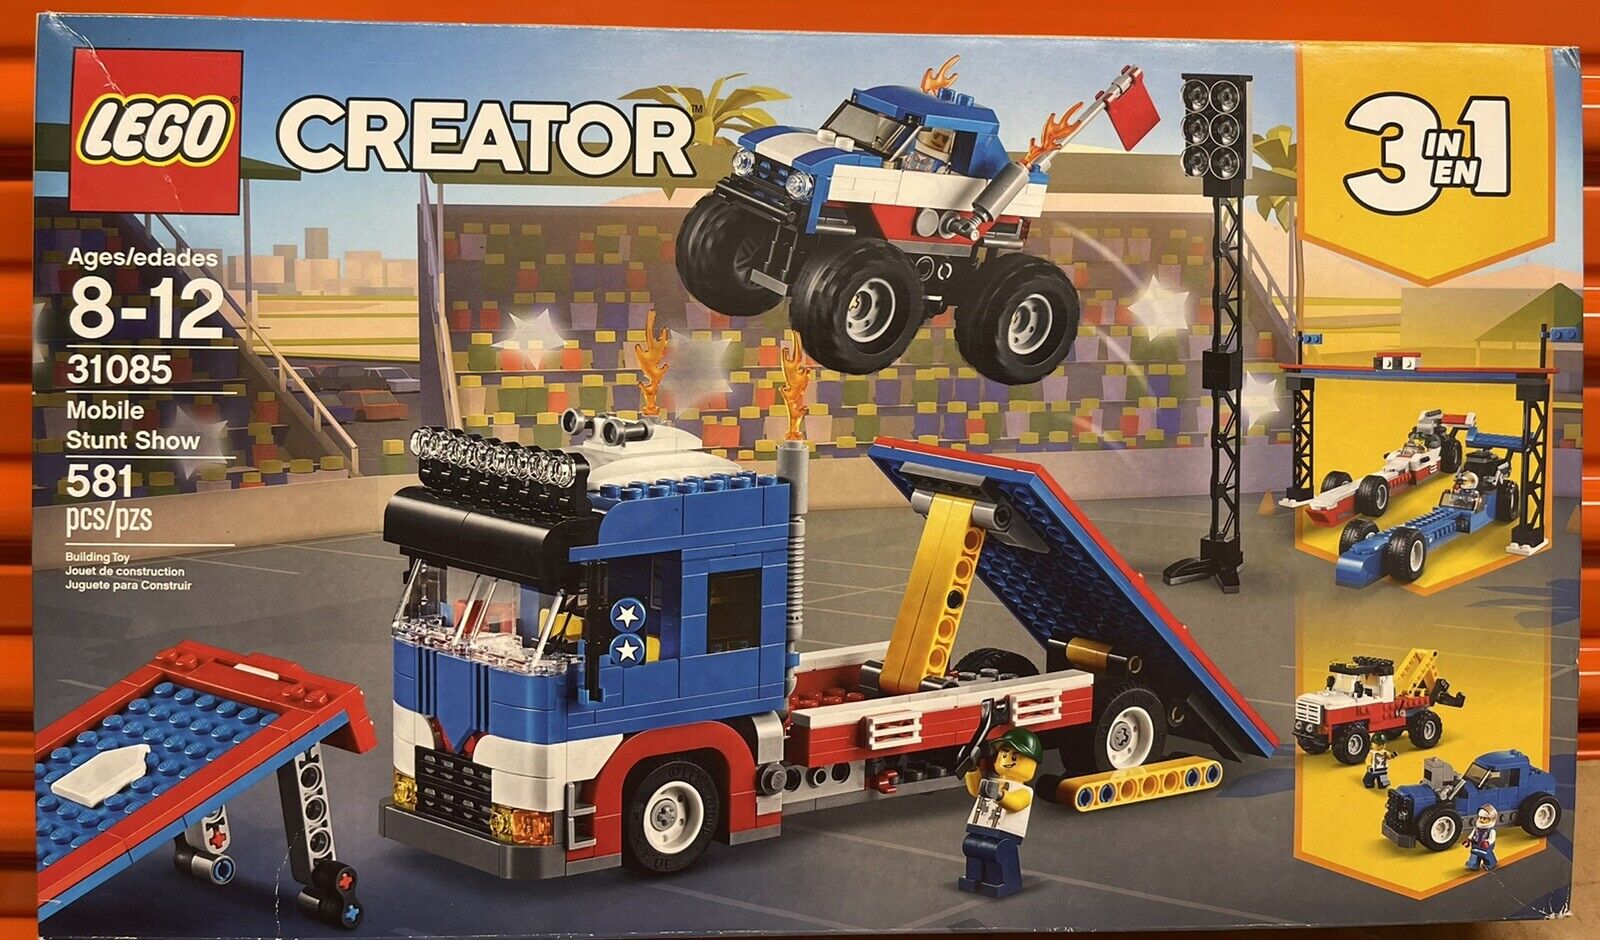 Retired Lego Creator Set 31085 Mobile Stunt Show